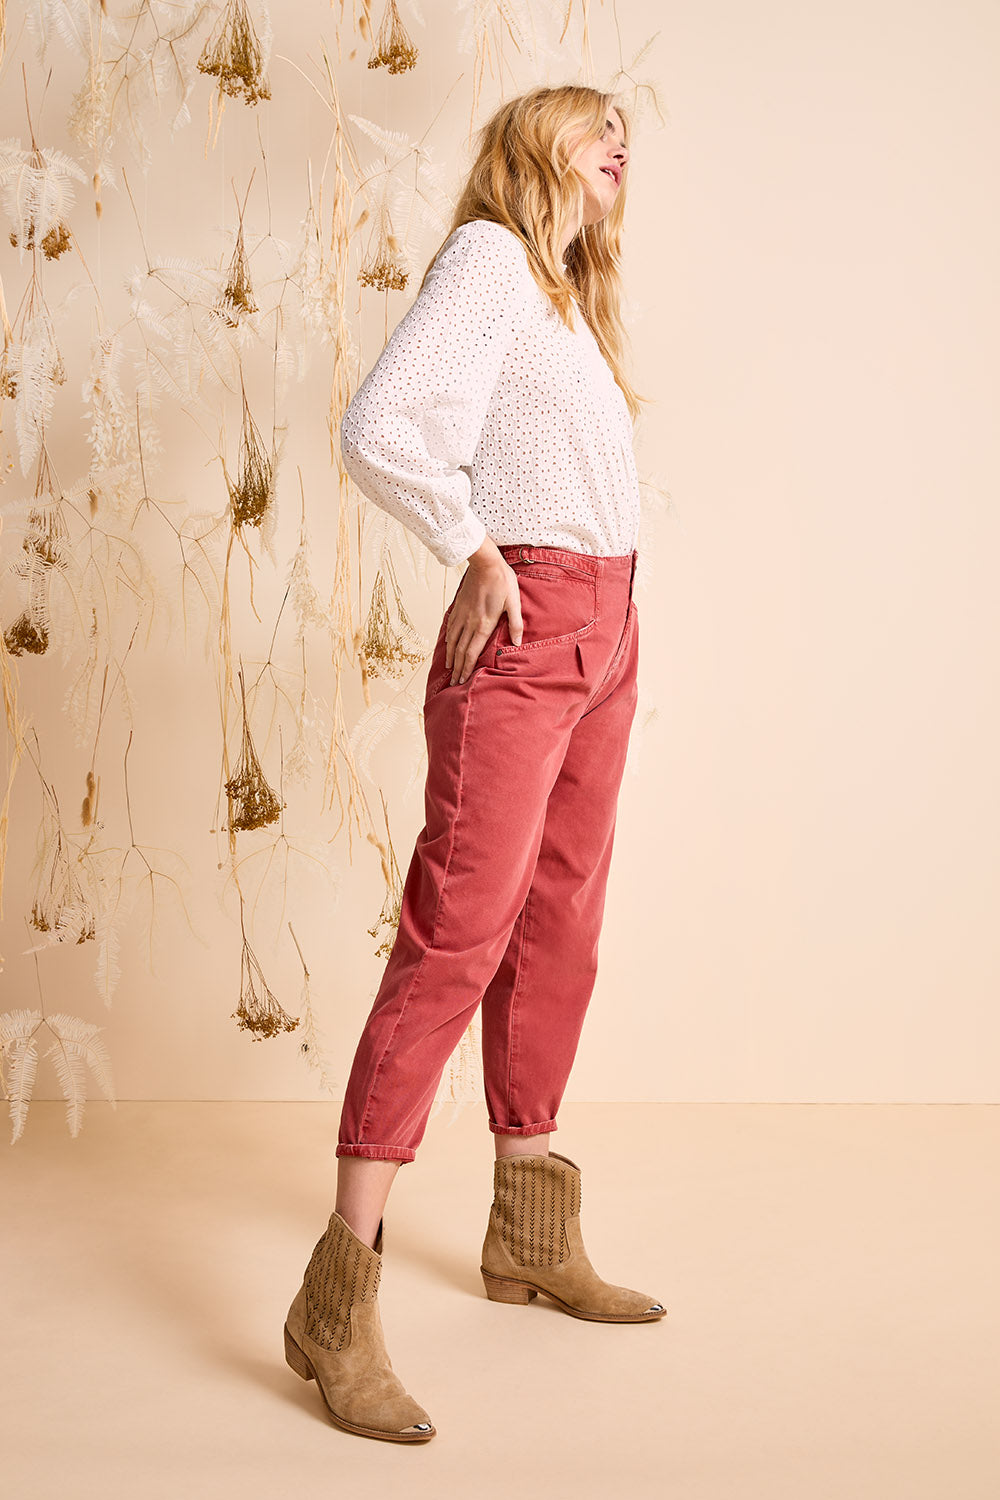 POLLY - Pantalon slouchy blush taille haute 7,8ème